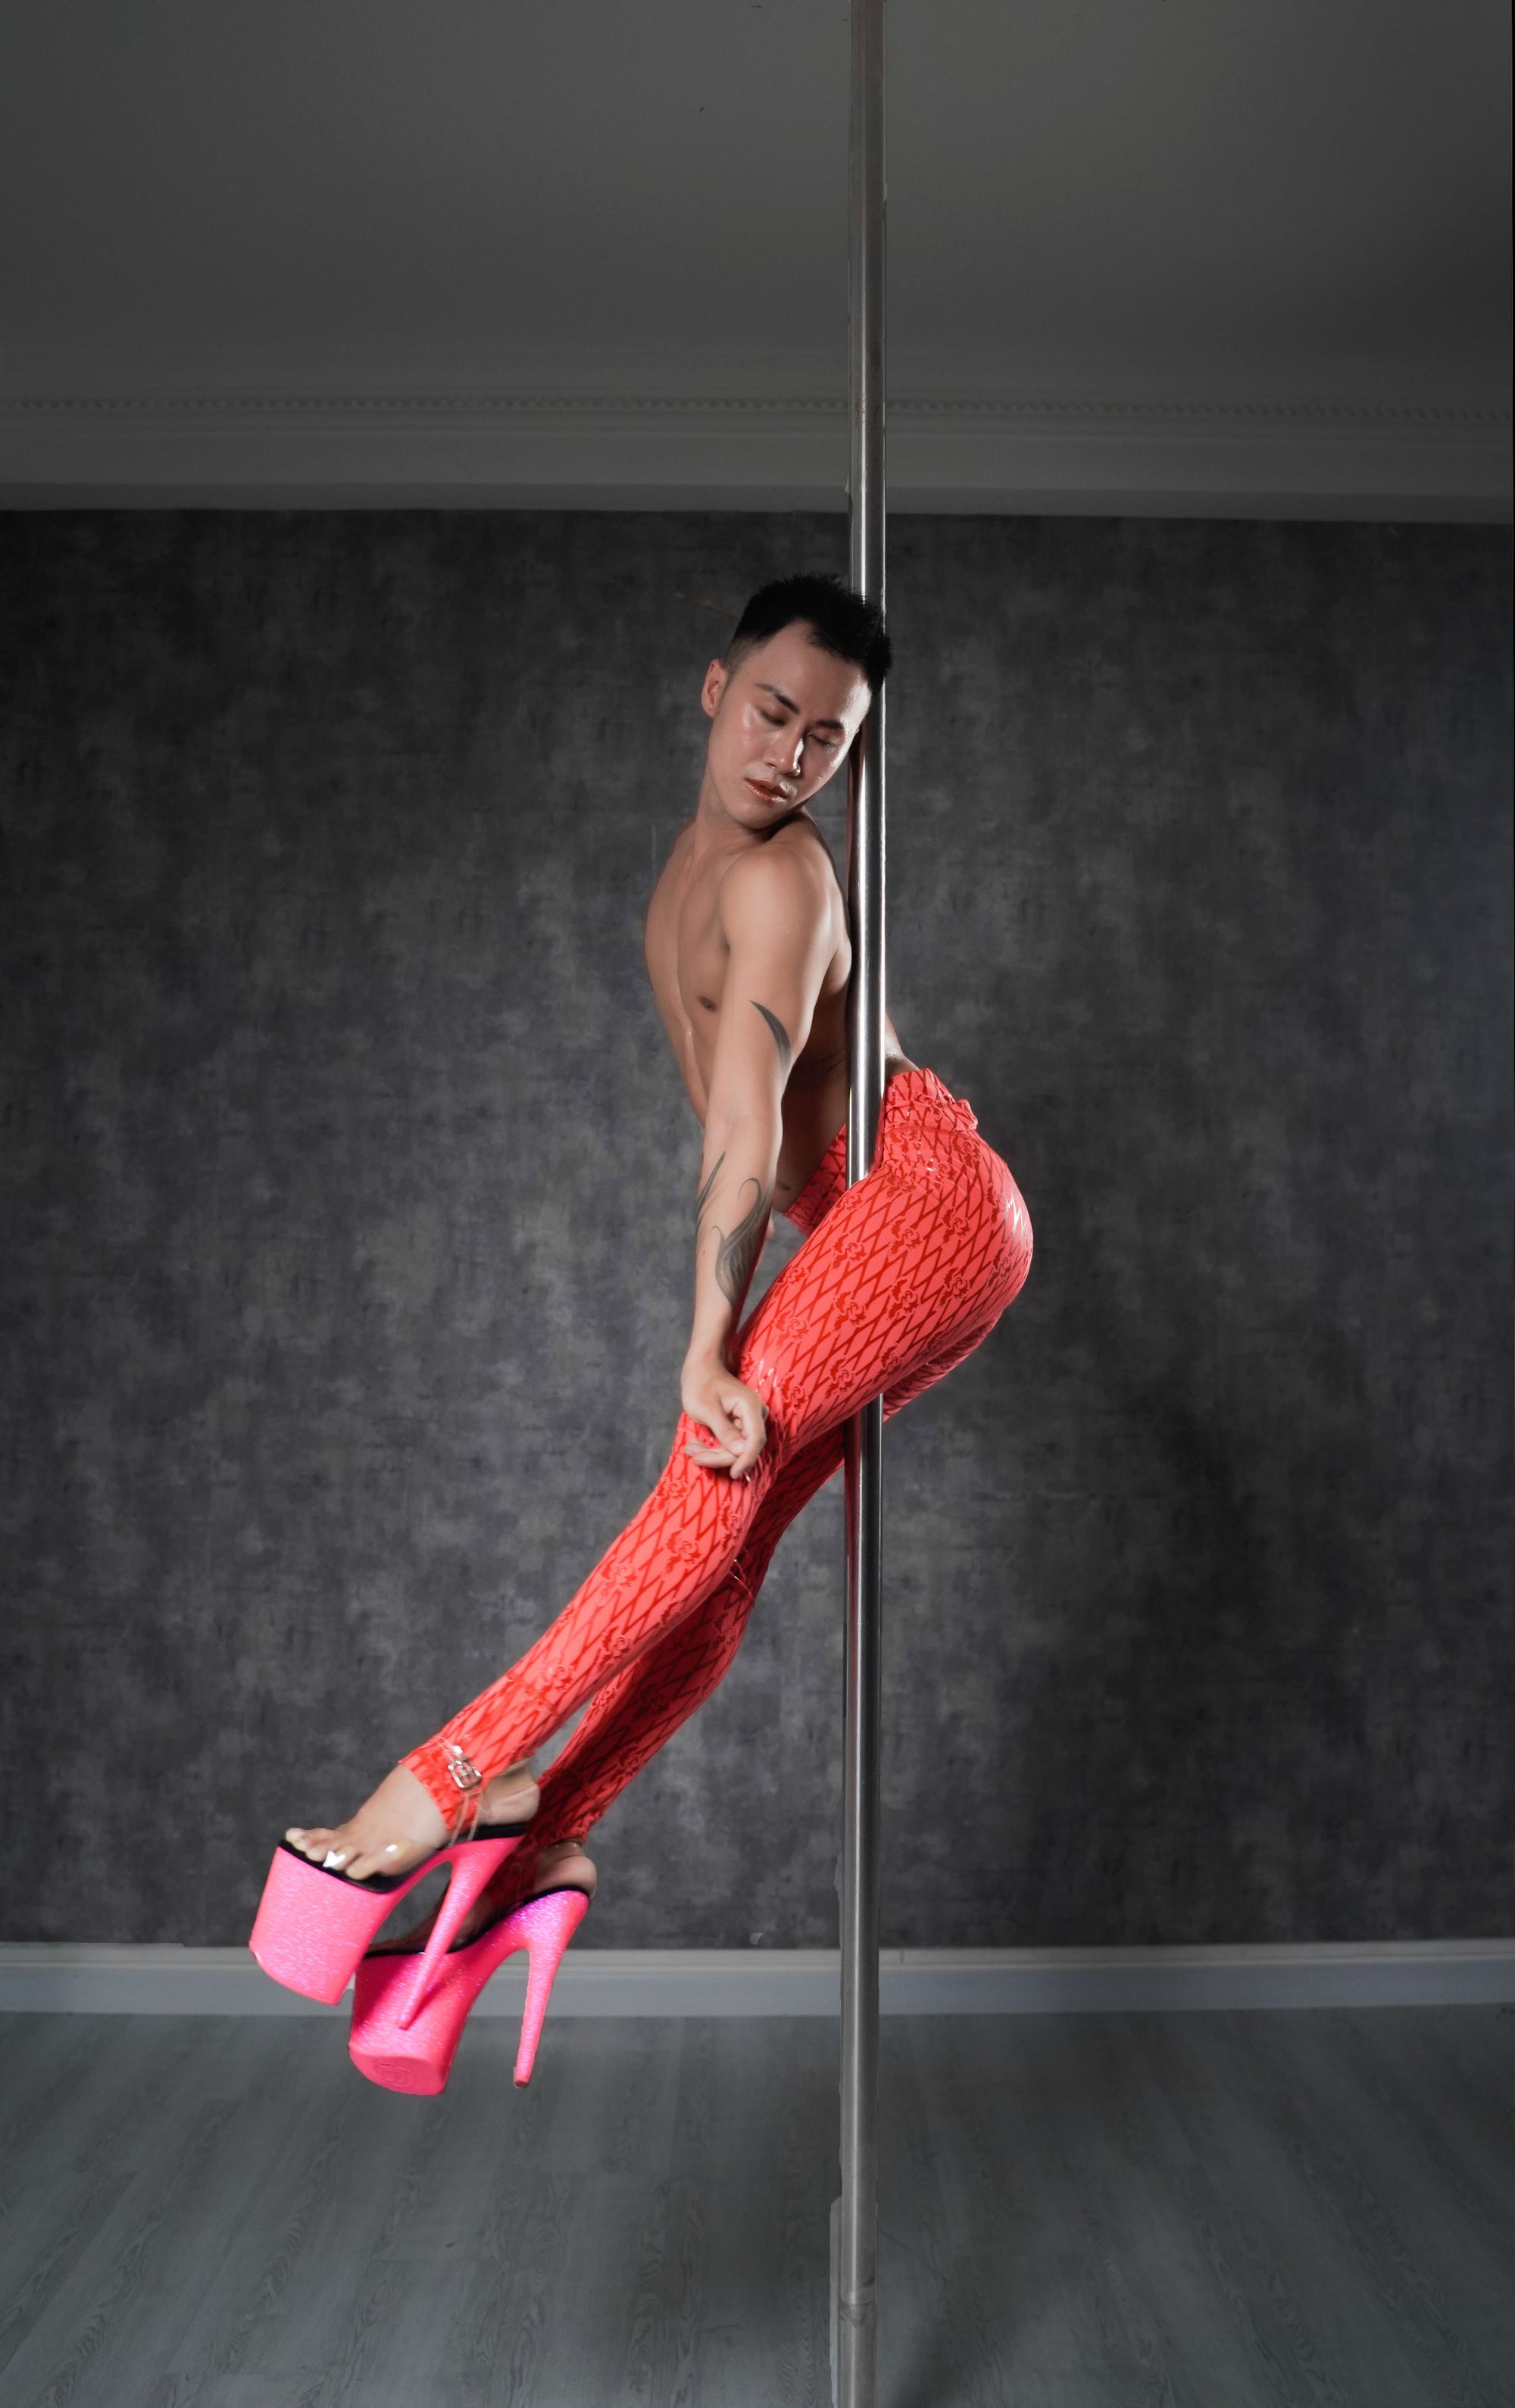 Quan Bui the pole dancer from Vietnam